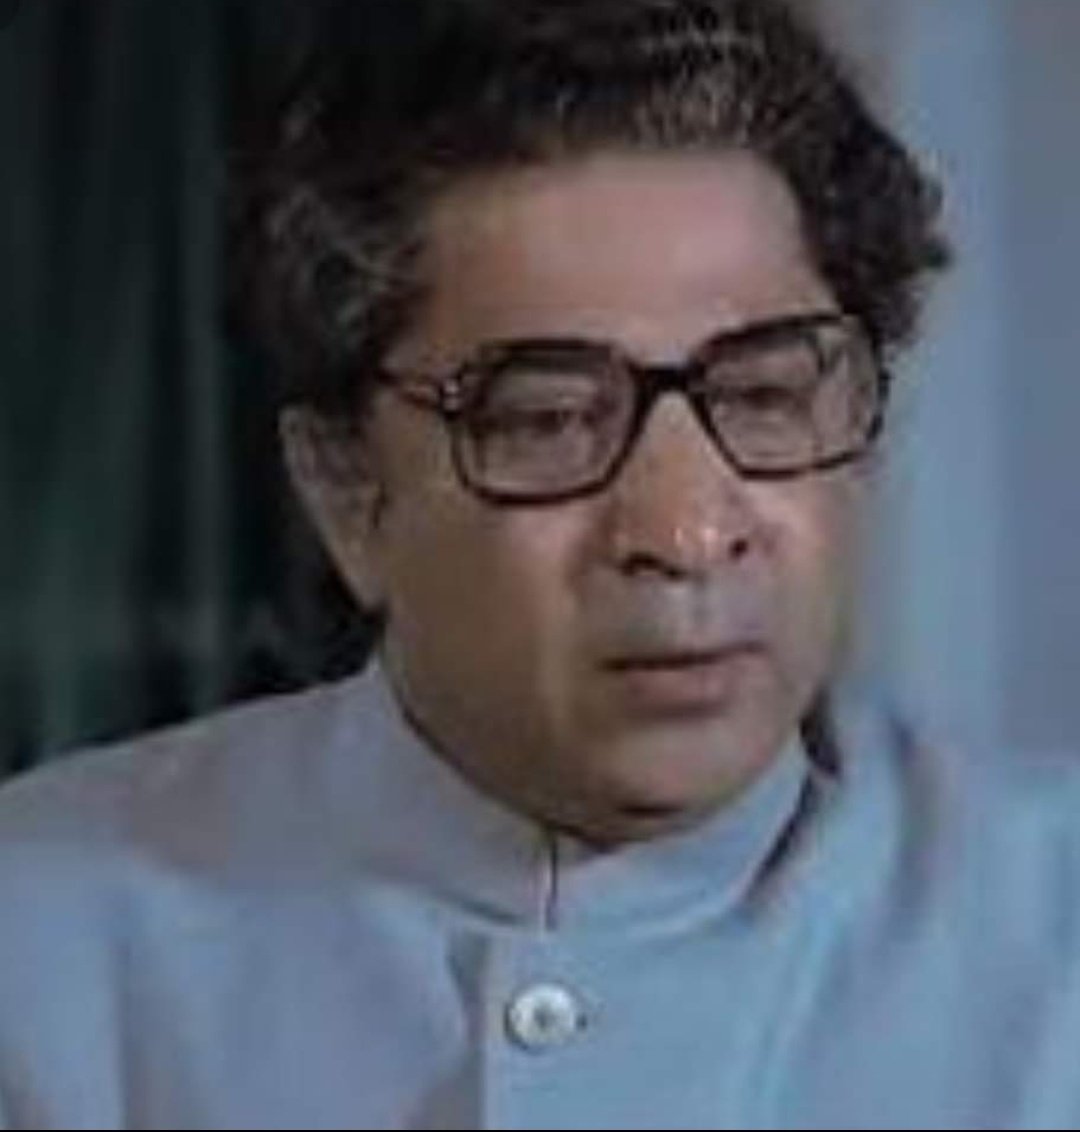 मशहूर चरित्र अभिनेता सत्येन कप्पू जी को जन्म दिवस पर शत-शत नमन।
#satyenKappu 
@SrBachchan 
@GulshanGroverGG 
@FilmHistoryPic 
@monty_nath